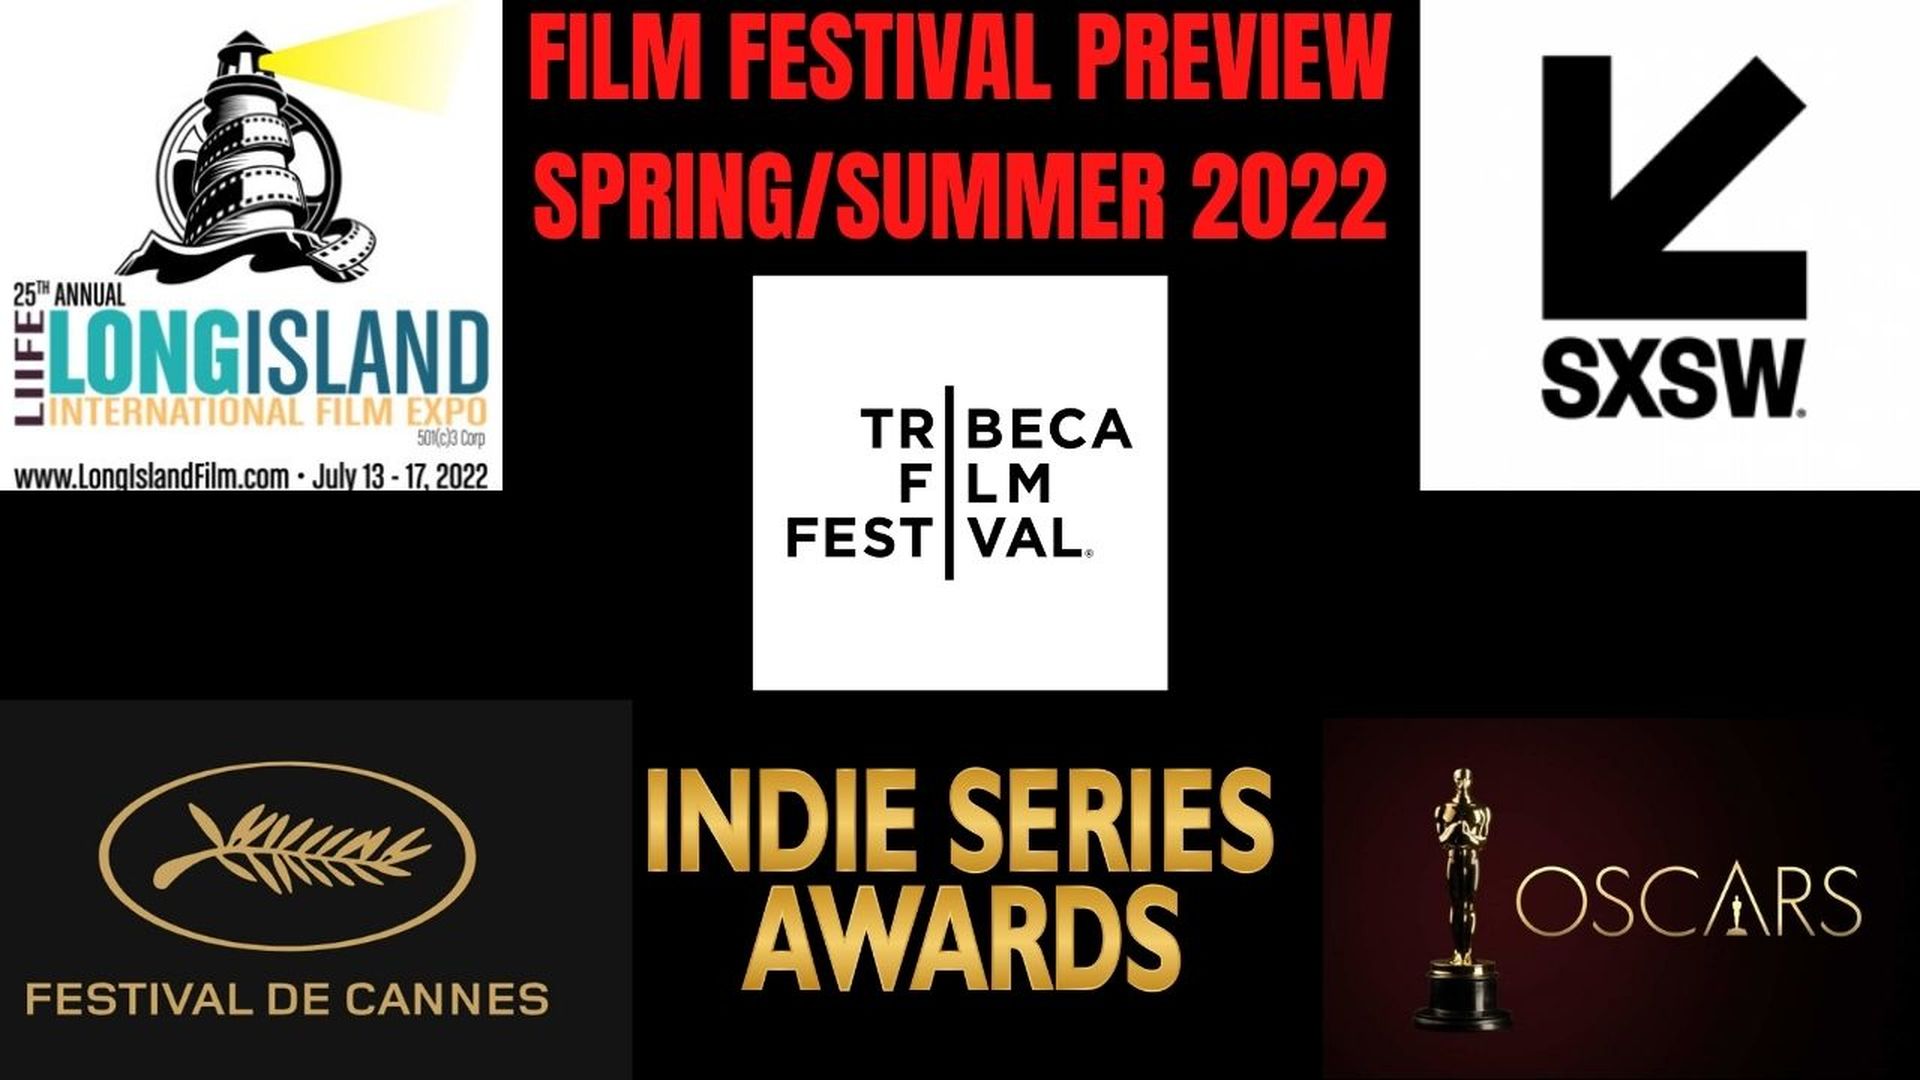 Episode1024: Indie Film News- Film Festival Preview Spring/Summer 2022